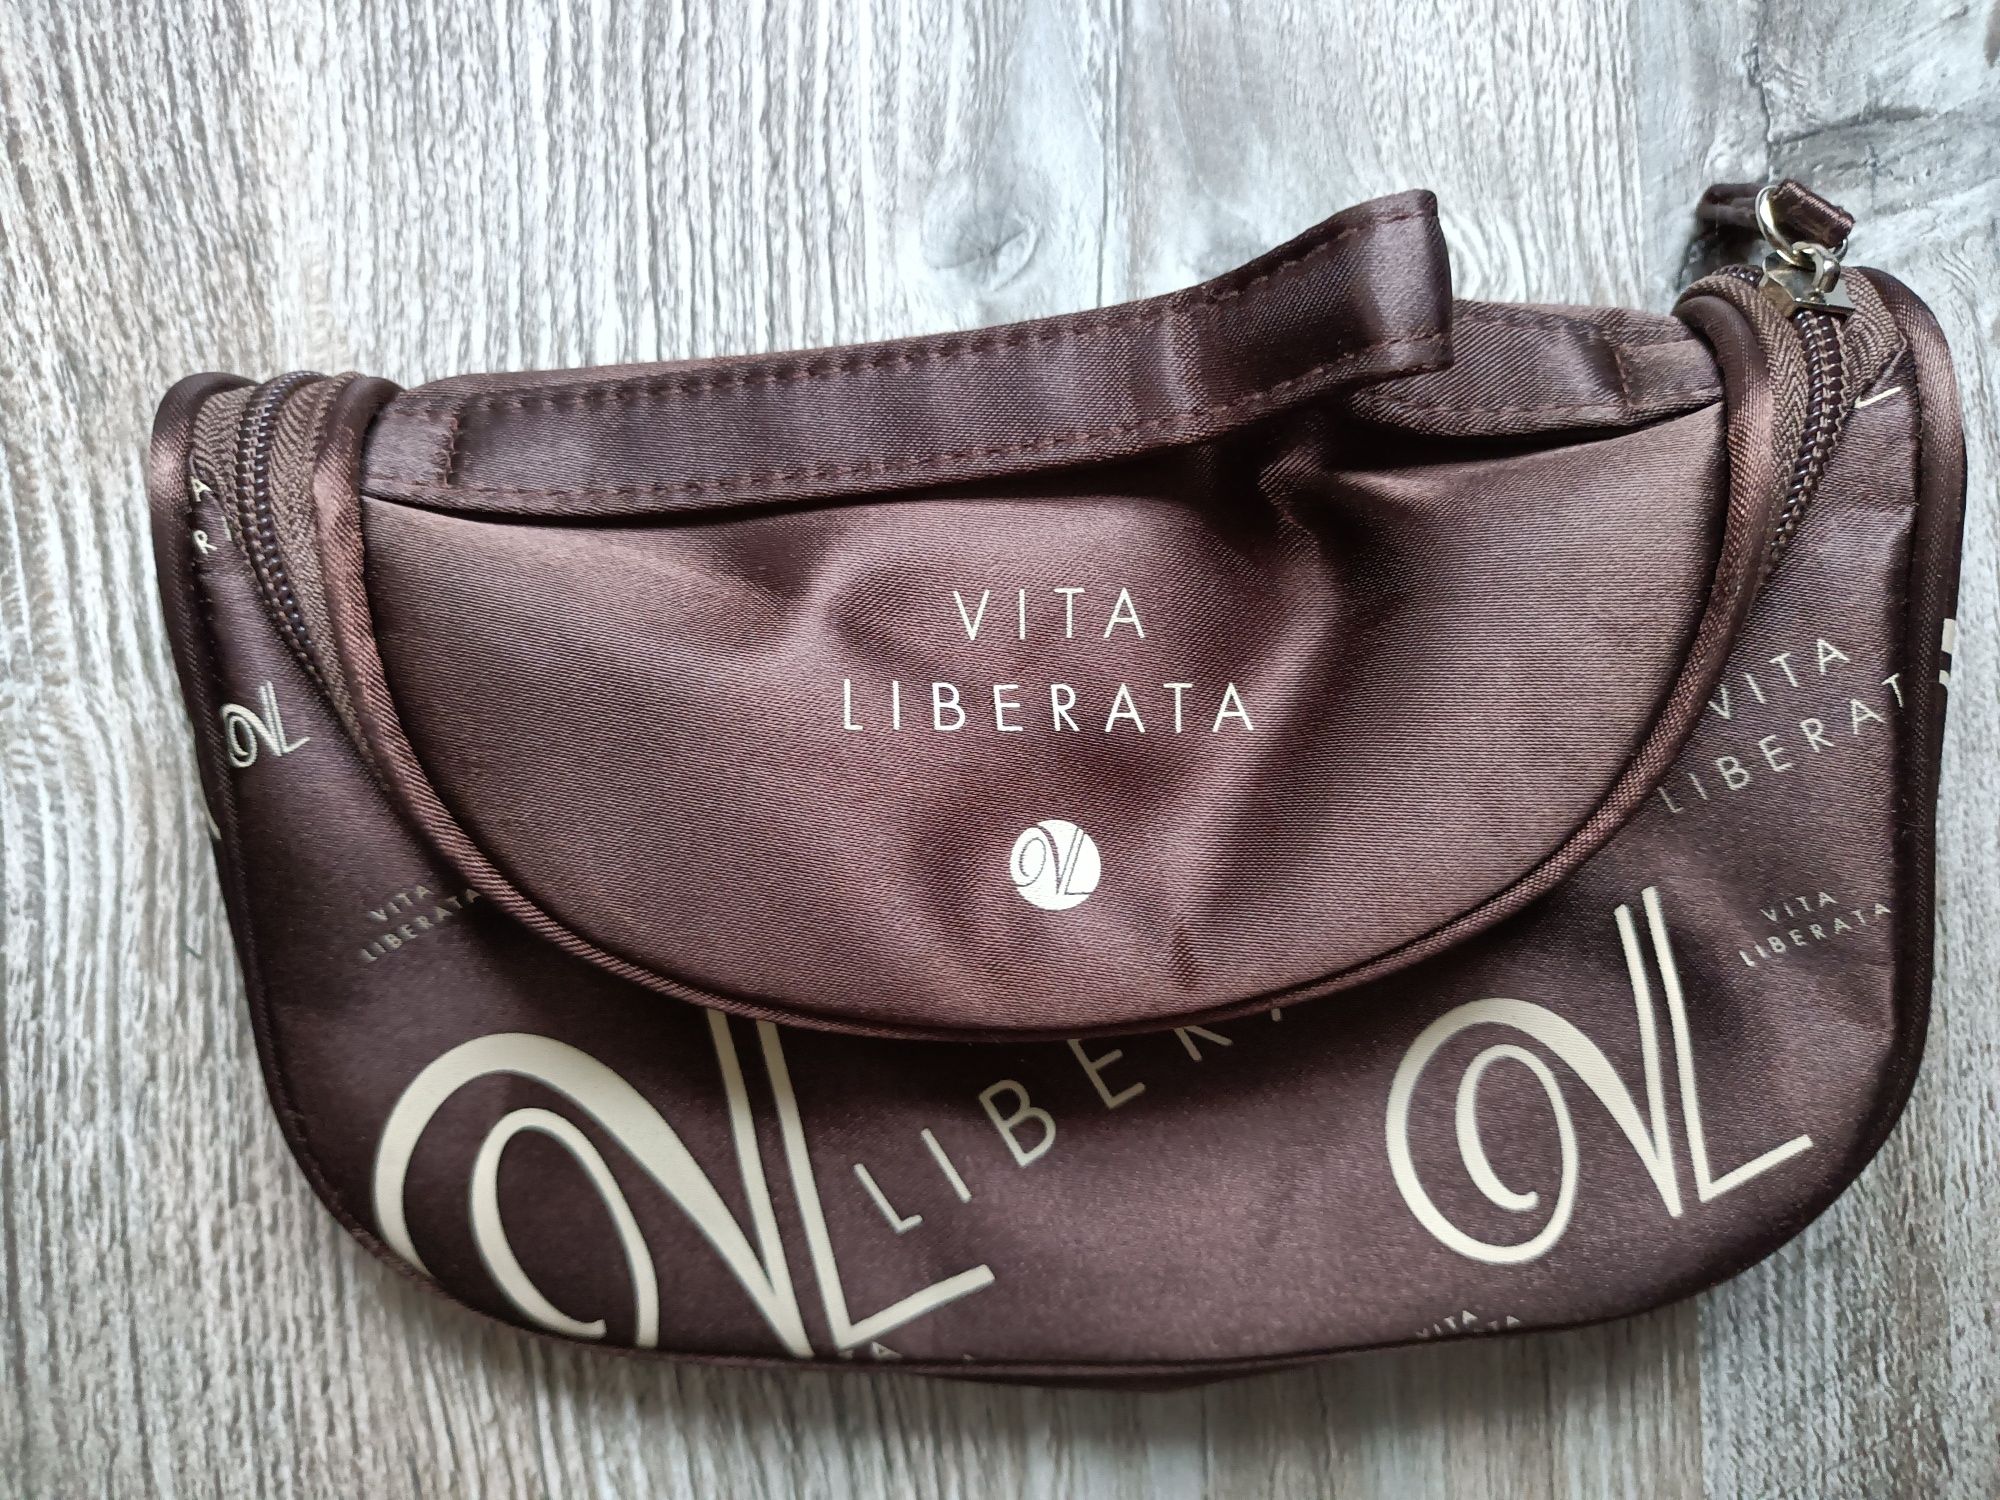 Kosmetyczka Vita liberata kolekcja limitowana nowa